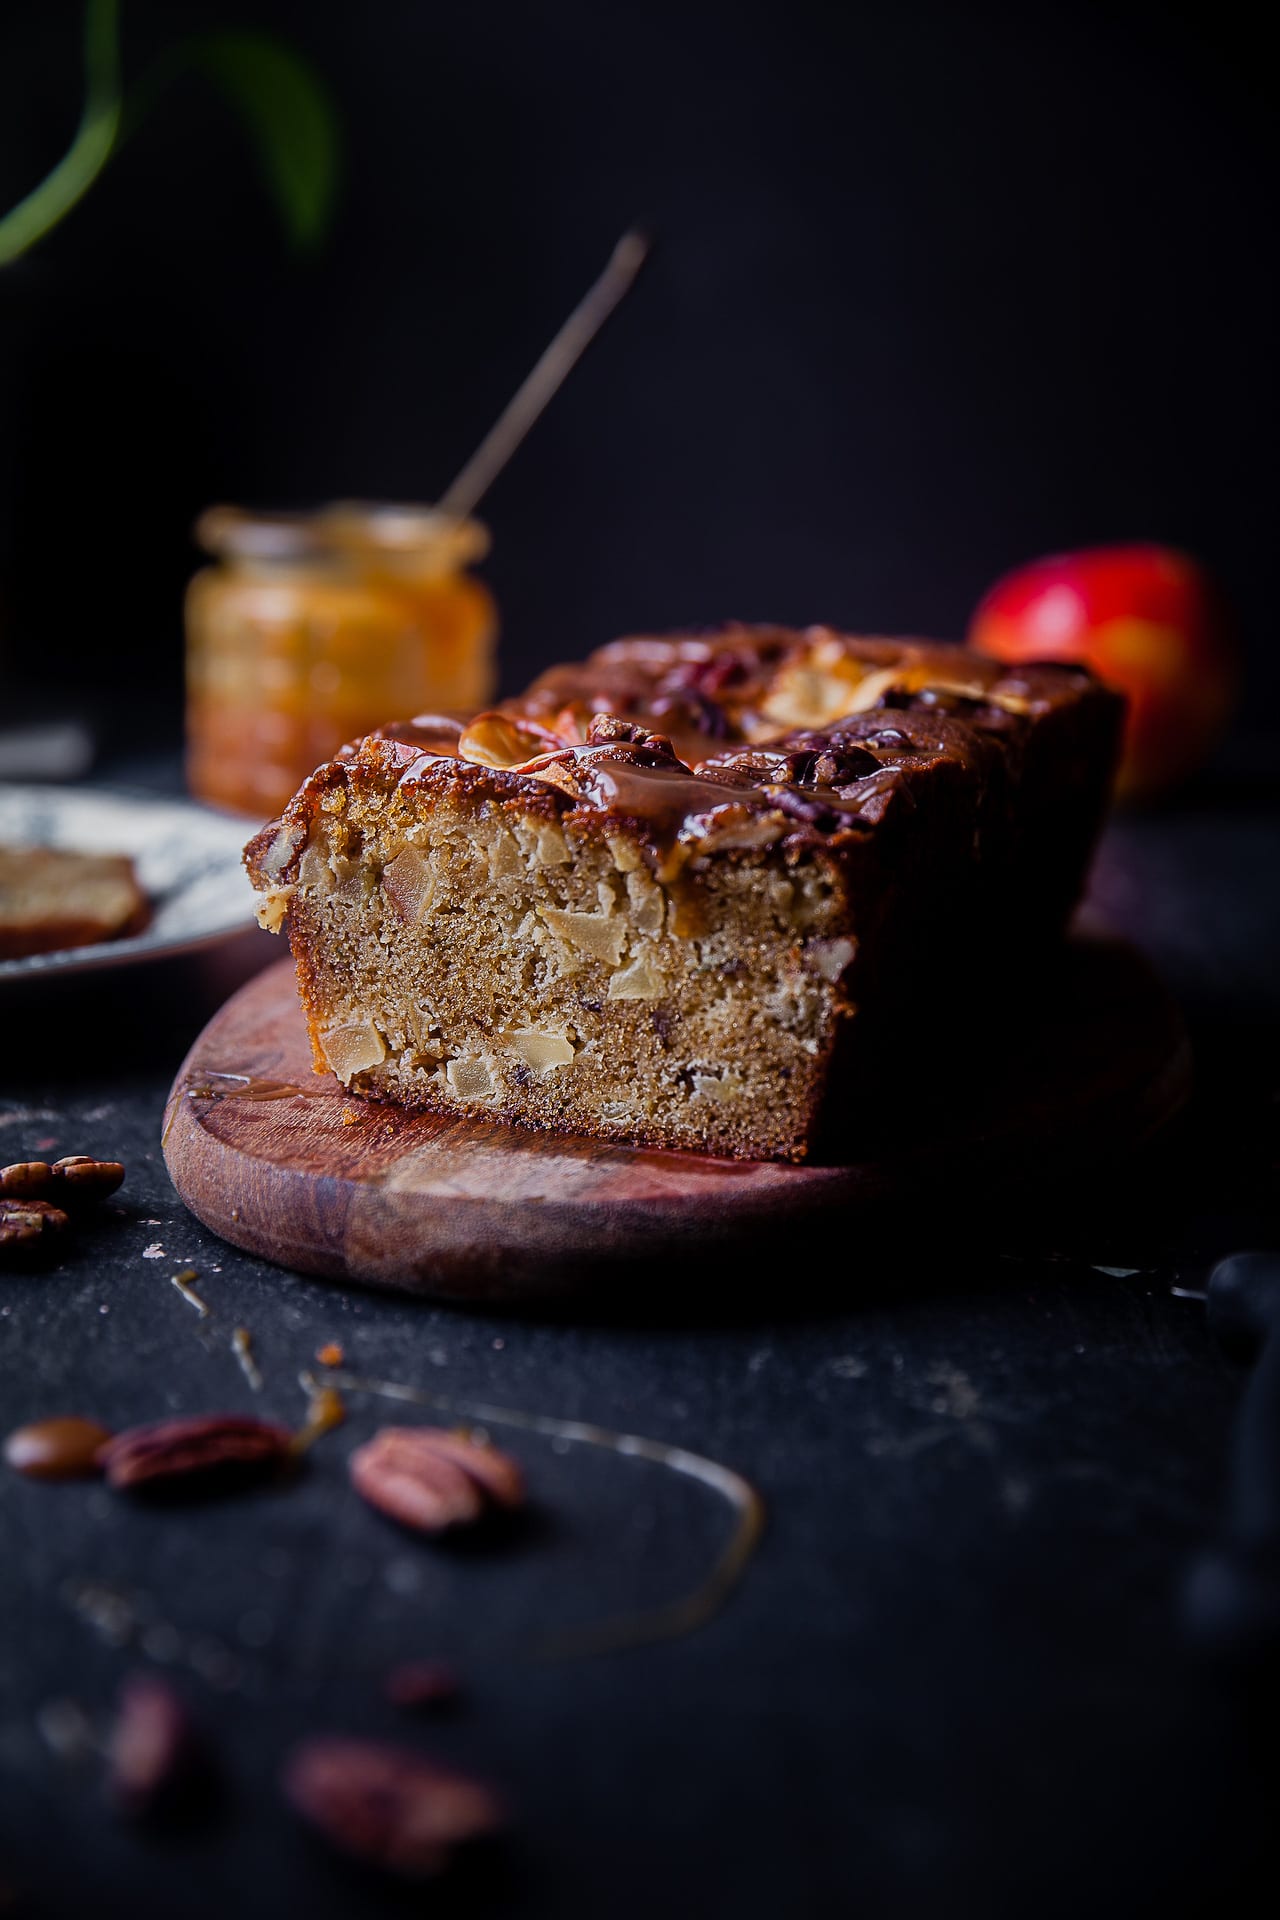 Apple Almond Cake | Playful Cooking #apple #cake #foodphotography #applecake #playfulcooking